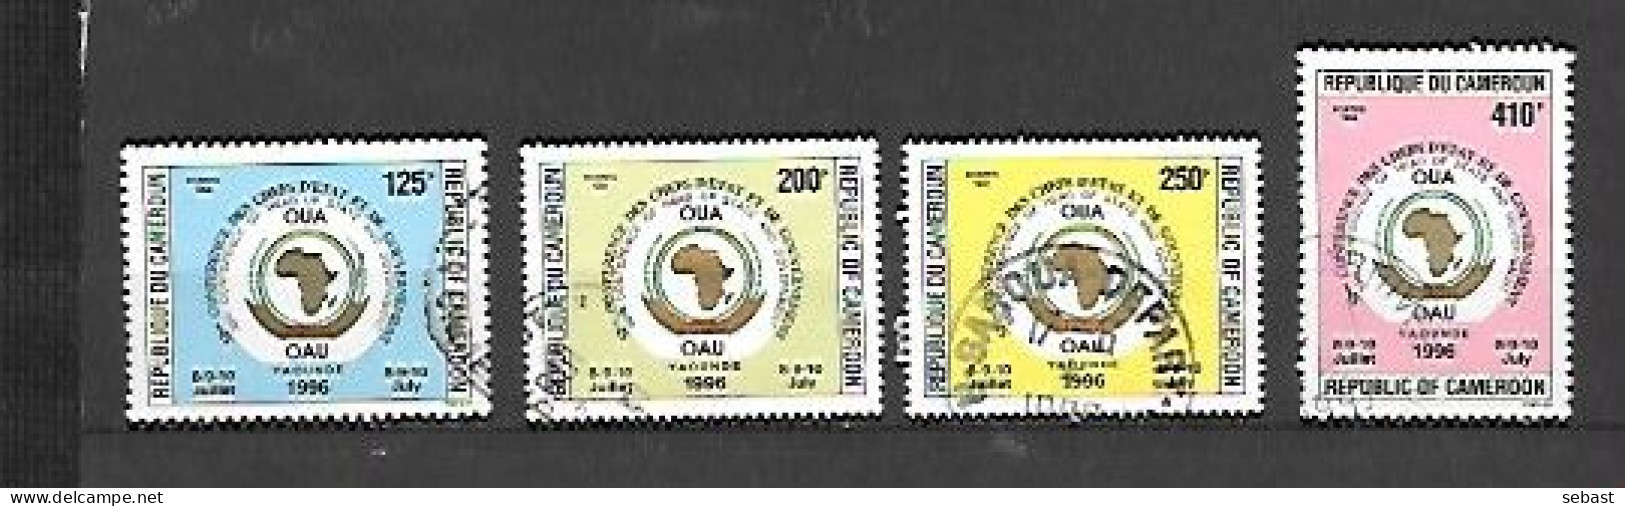 TIMBRE OBLITERE DU CAMEROUN DE 1996 N° MICHEL 1221/24 - Cameroun (1960-...)